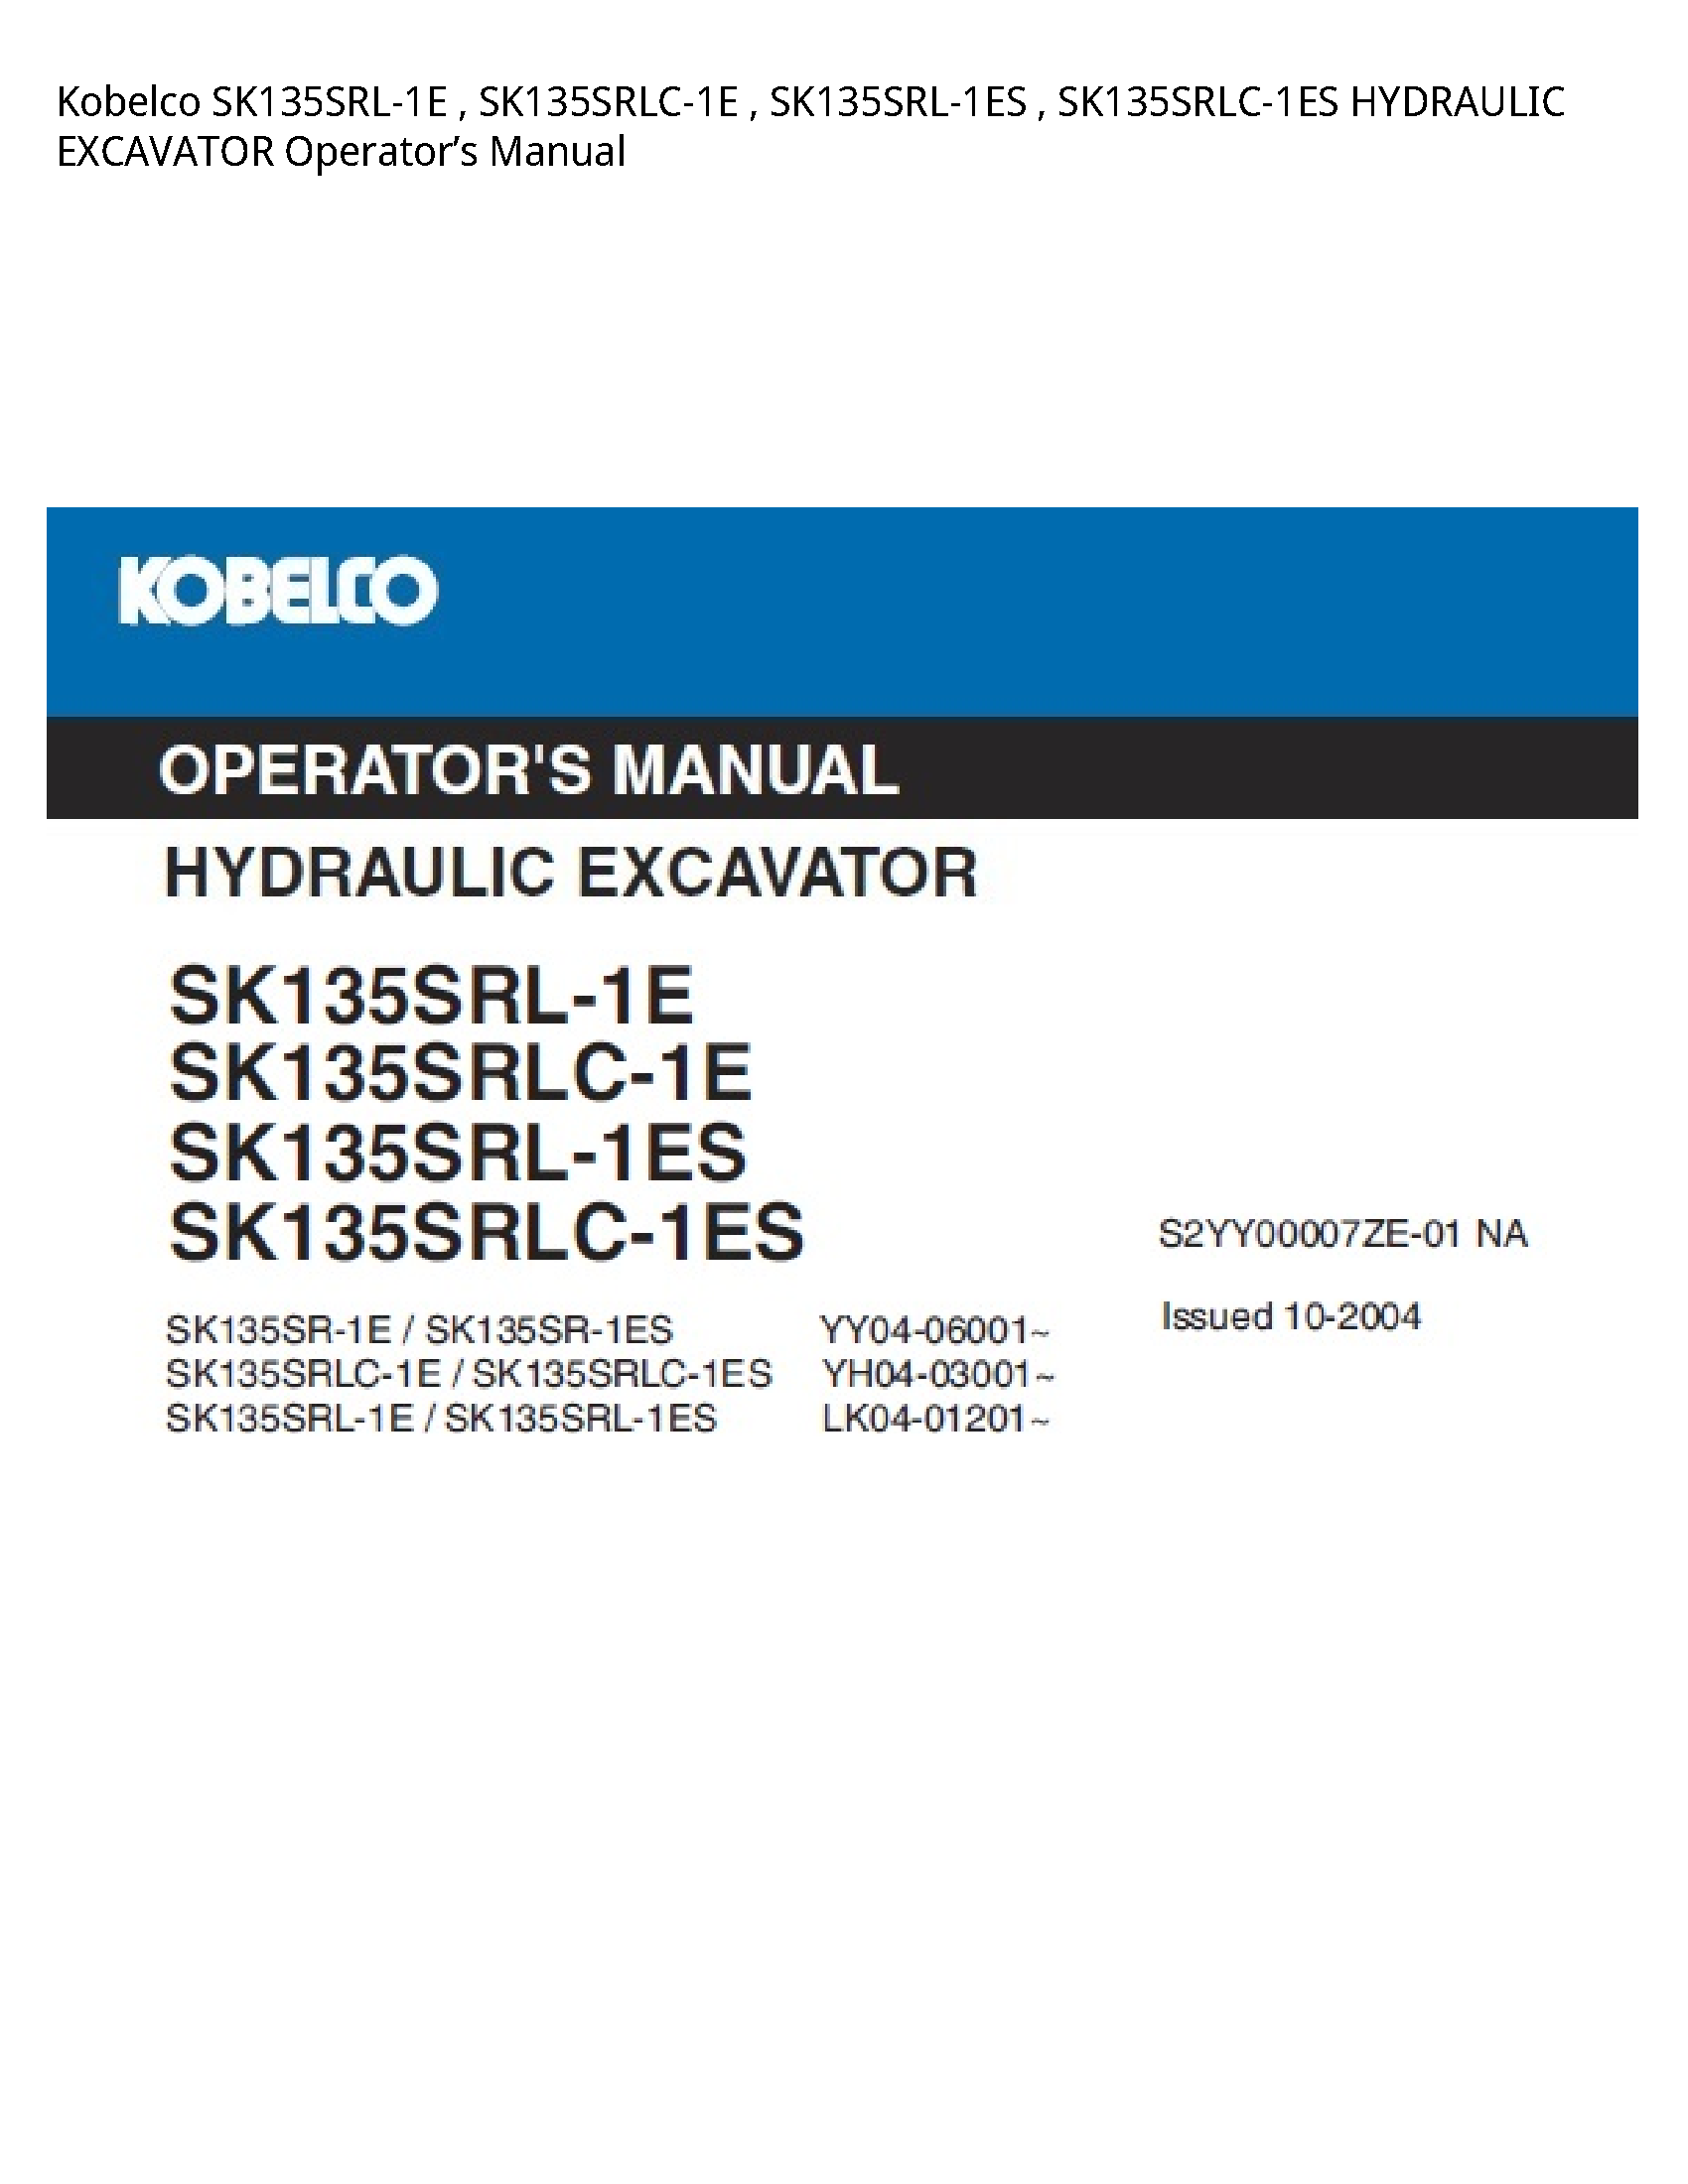 Kobelco SK135SRL-1E HYDRAULIC EXCAVATOR Operator’s manual